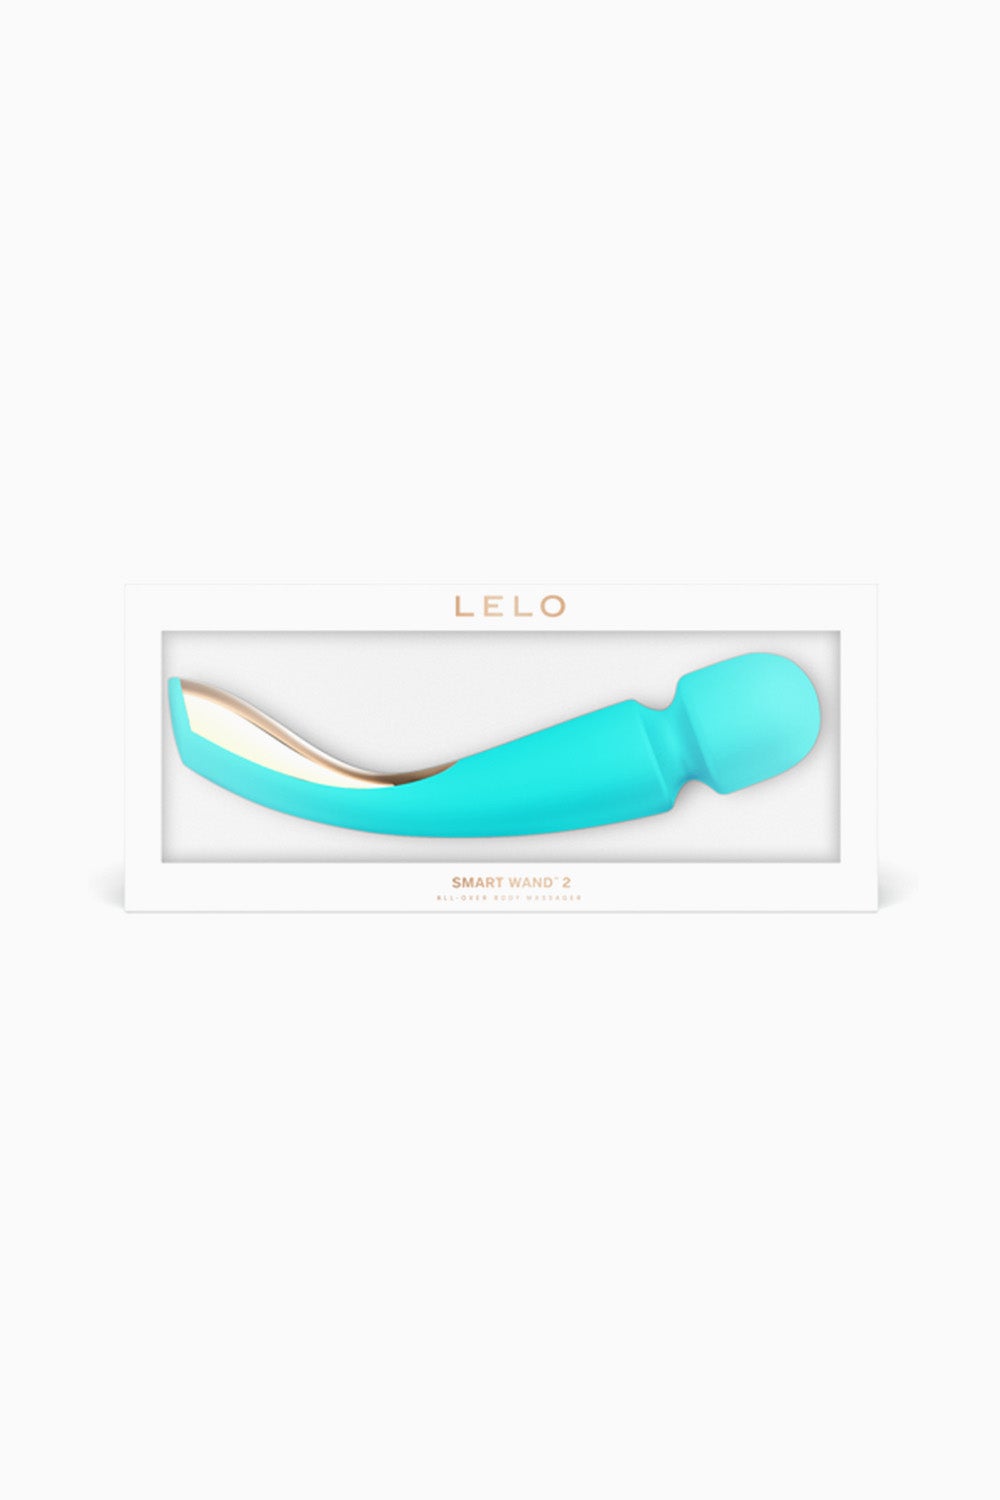 Lelo Smart Wand 2 Vibrator Massager - Aqua, 11.5 Inches